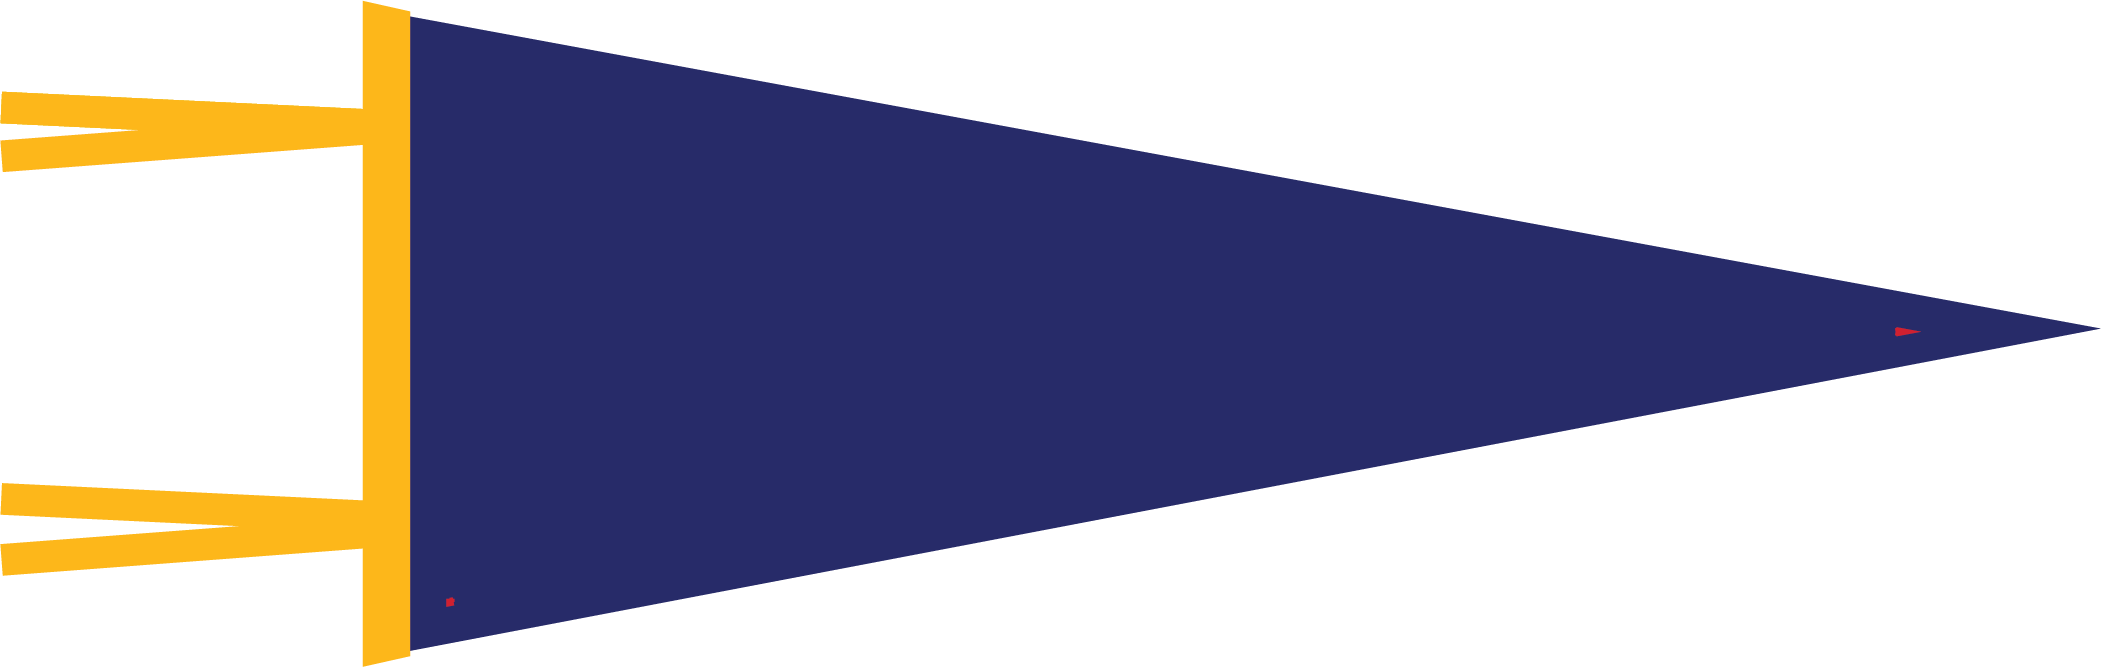 Navy Blue / Gold Blank Pennant Flag